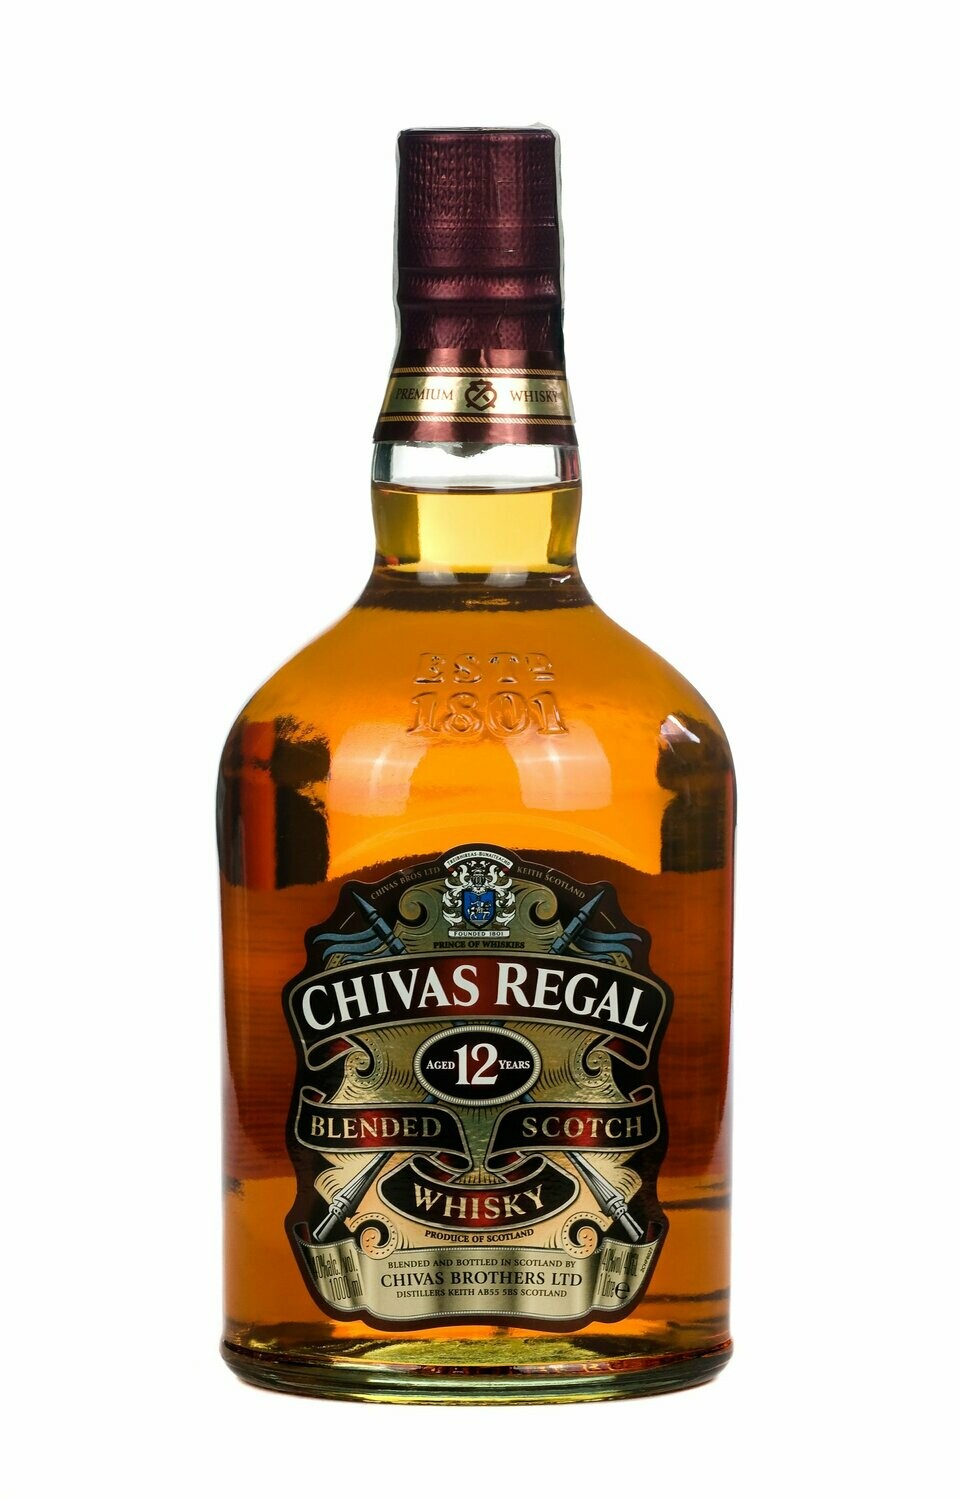 Chivas Regal 12 year old Scotch 750ml